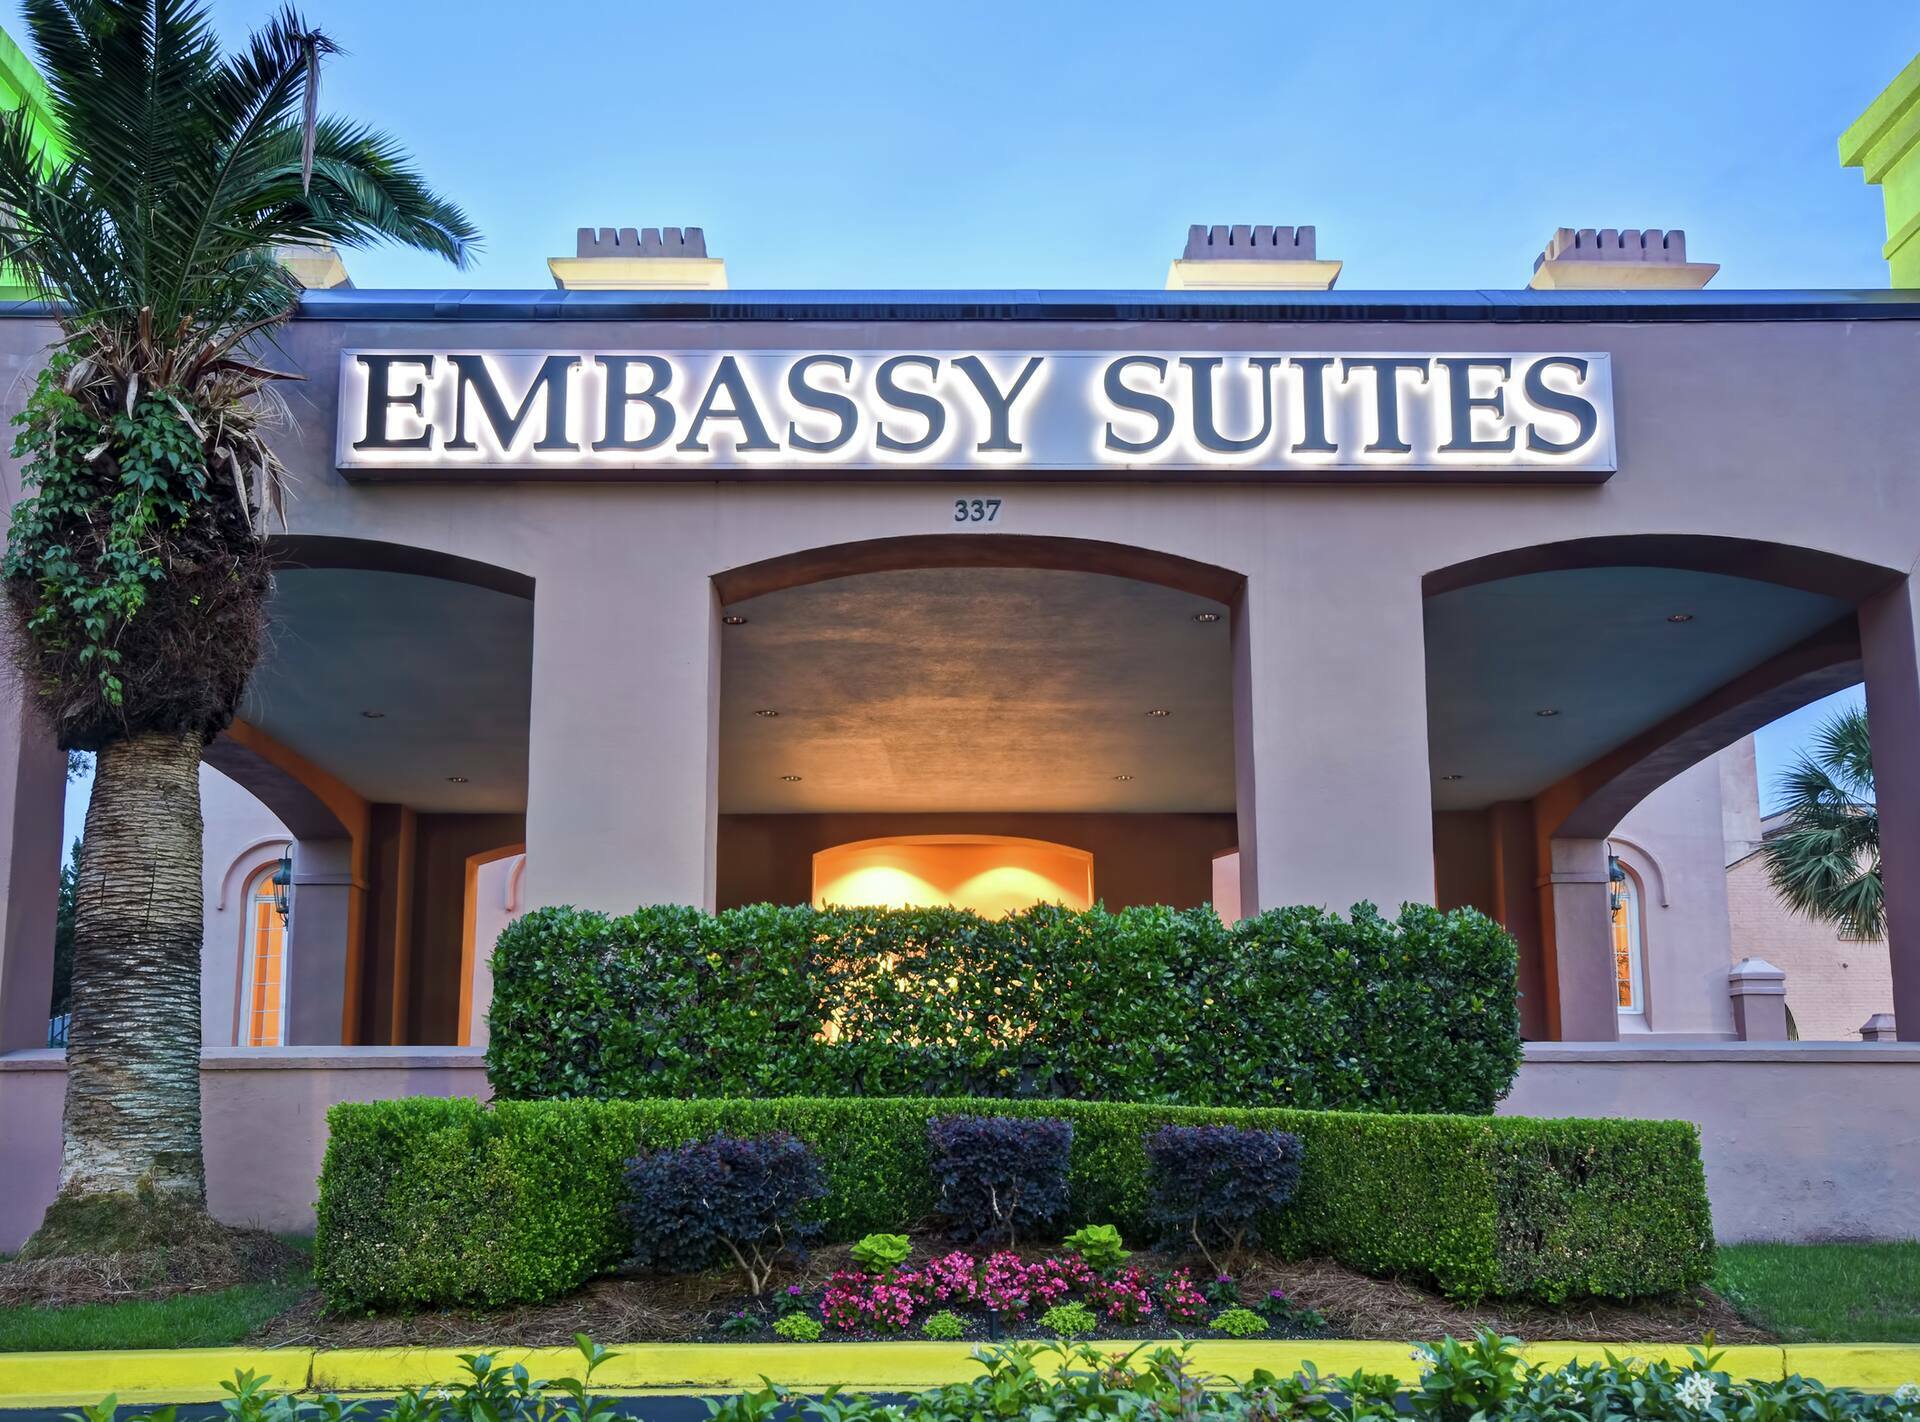 Photo of Embassy Suites by Hilton Charleston Historic District, Charleston, SC